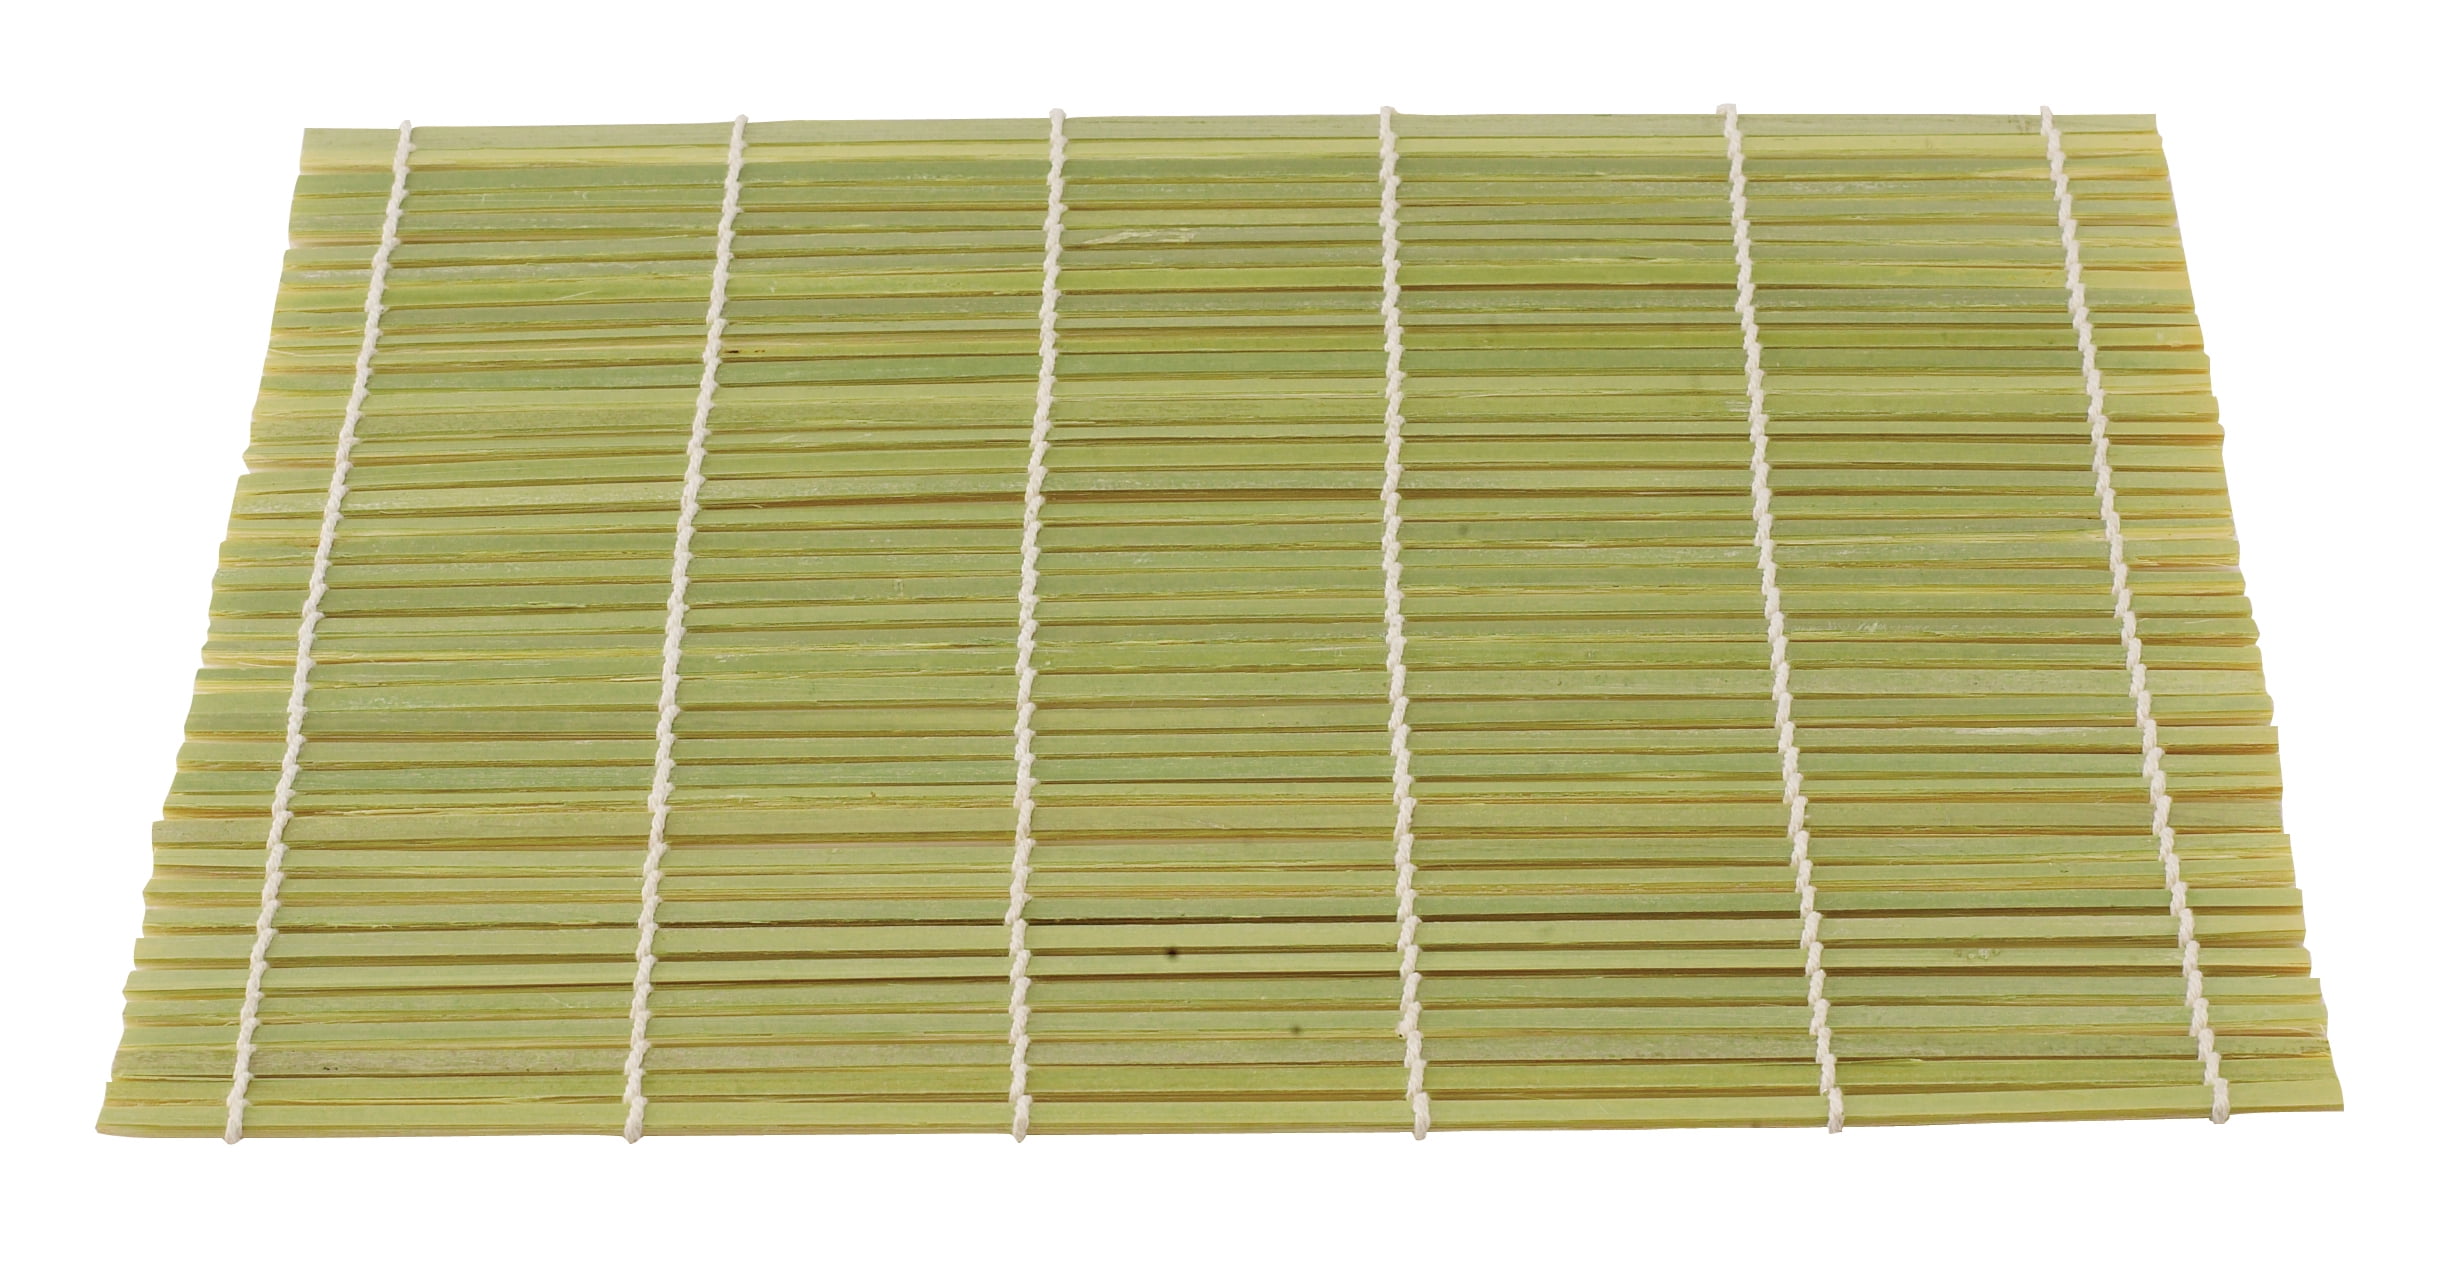 Emperor's Select 9 1/2 x 9 1/2 Natural Bamboo Sushi Rolling Mat